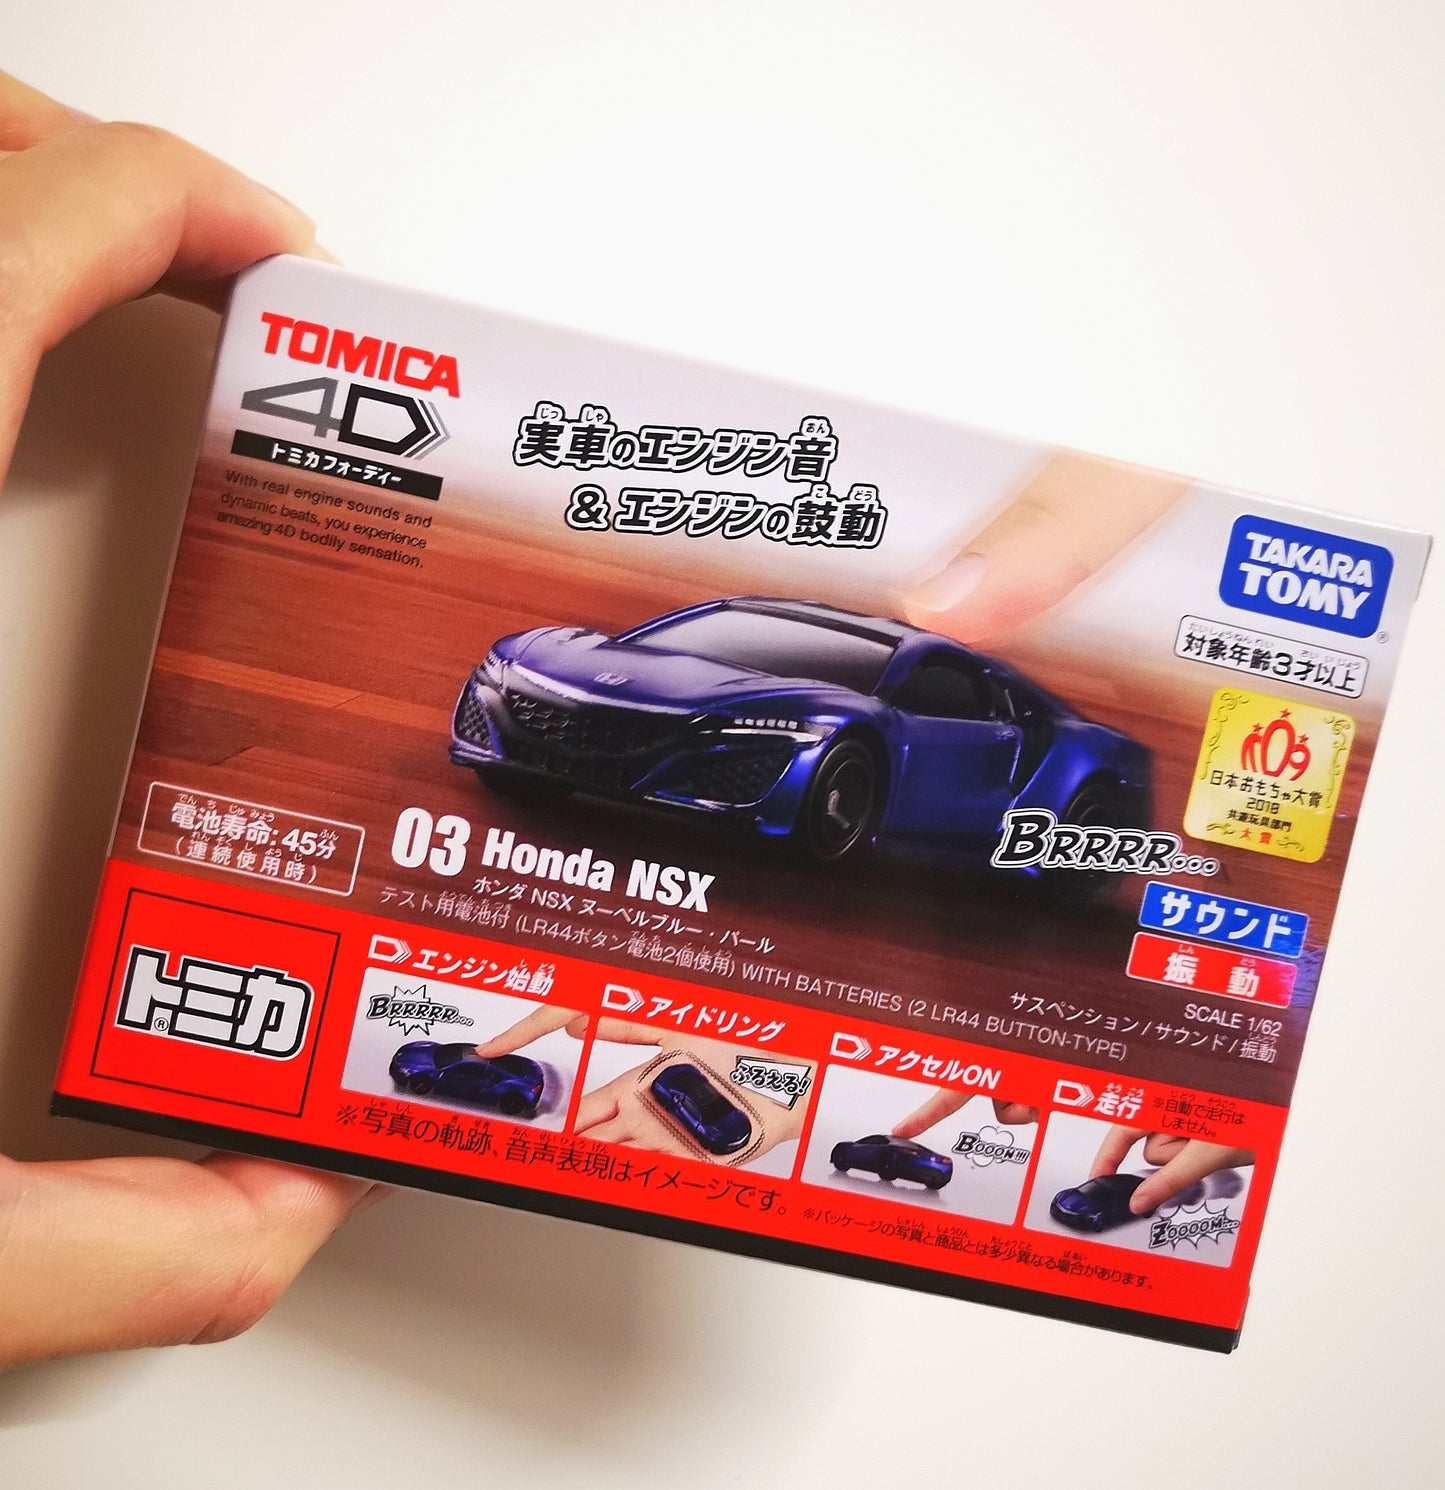 Light & Sound Tomica 4D
Honda New NSX ACURA Blue